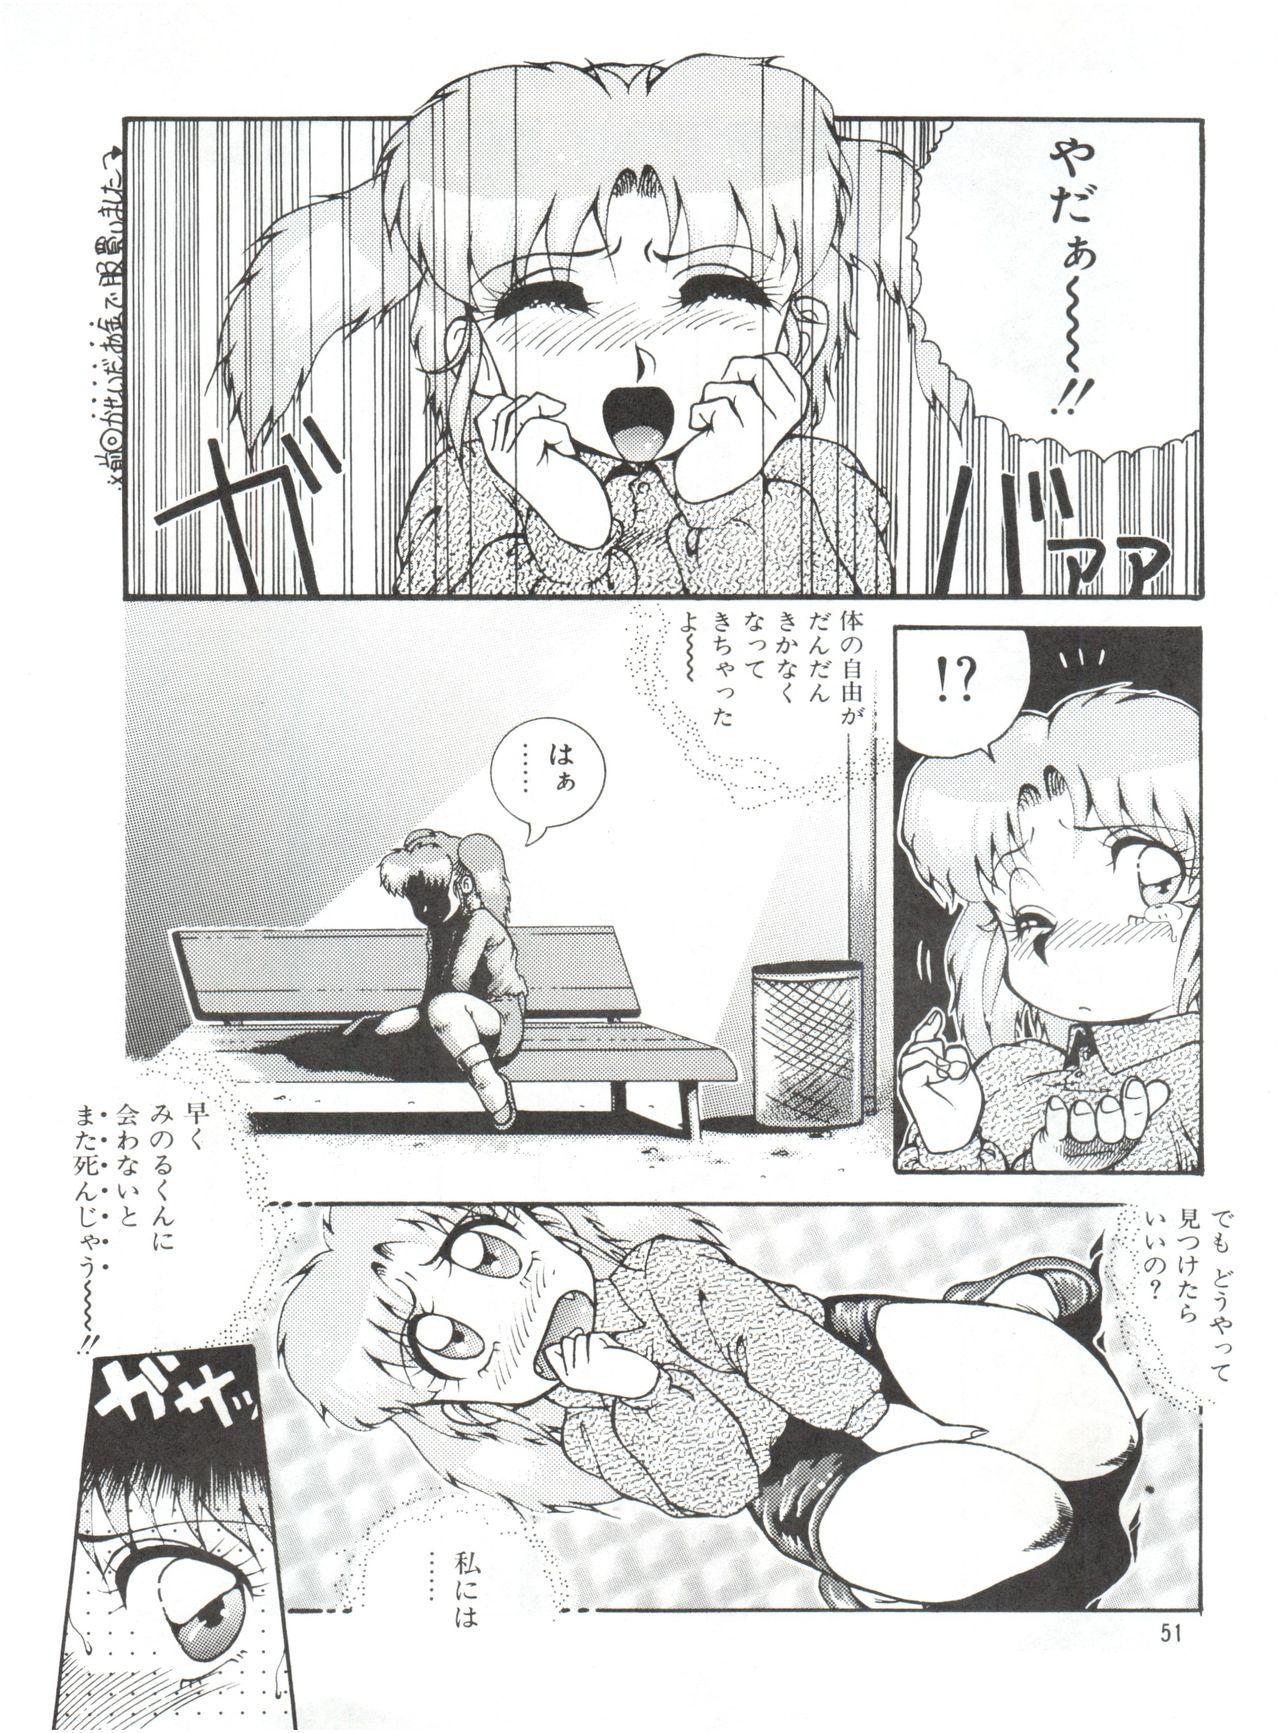 Meika Azumaya vol.2 52